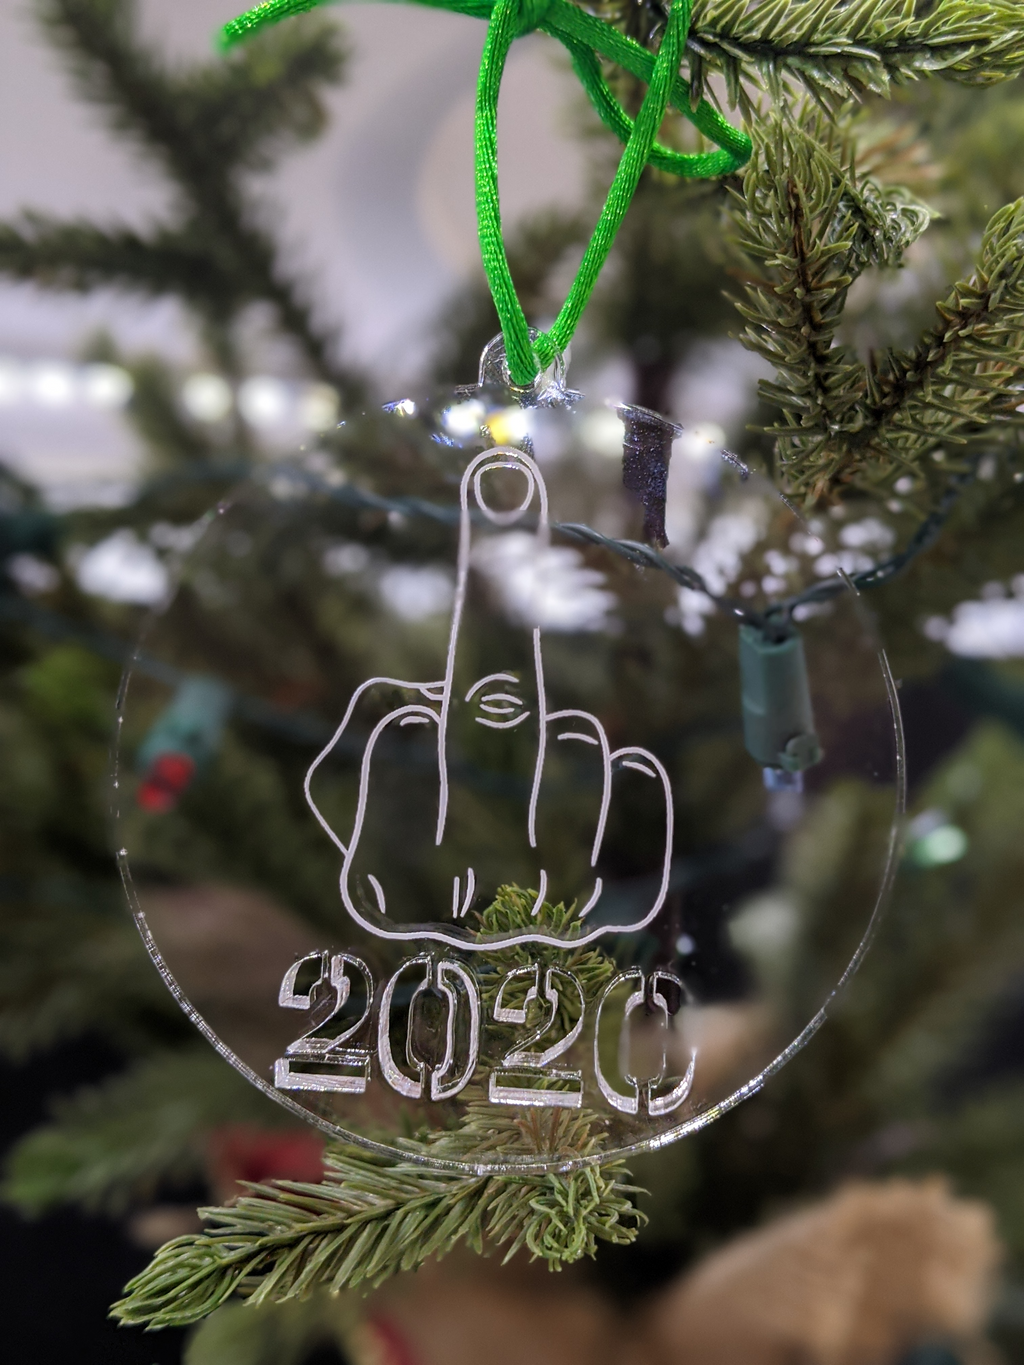 Unpleasant Greeting 2020 Ornament